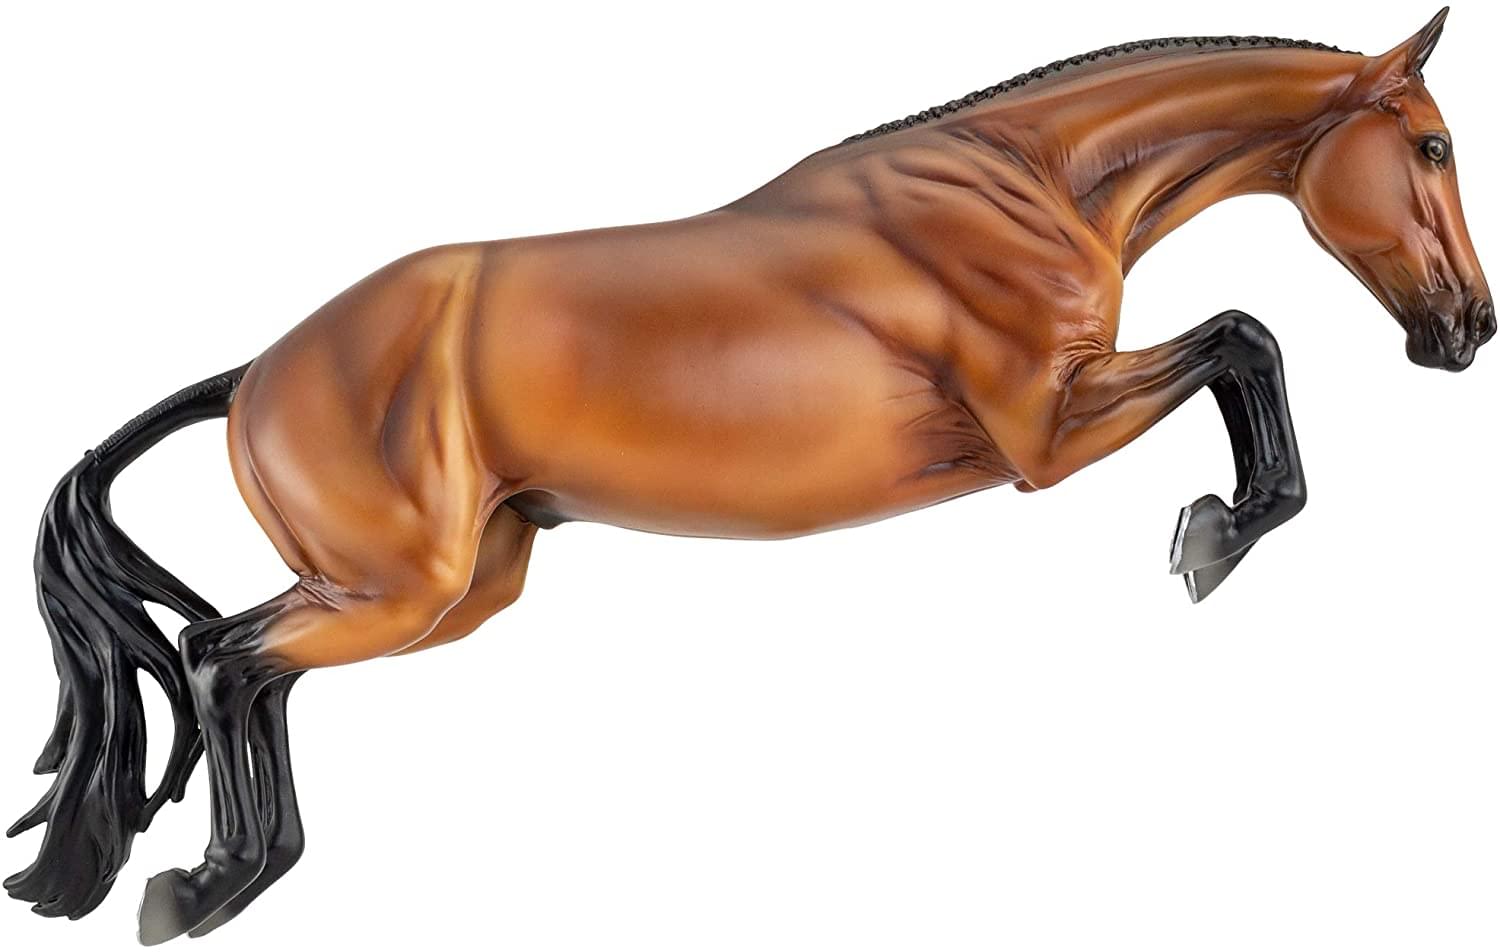 Breyer Traditional 1:9 Scale Model Horse | Voyeur Champion Show Jumper